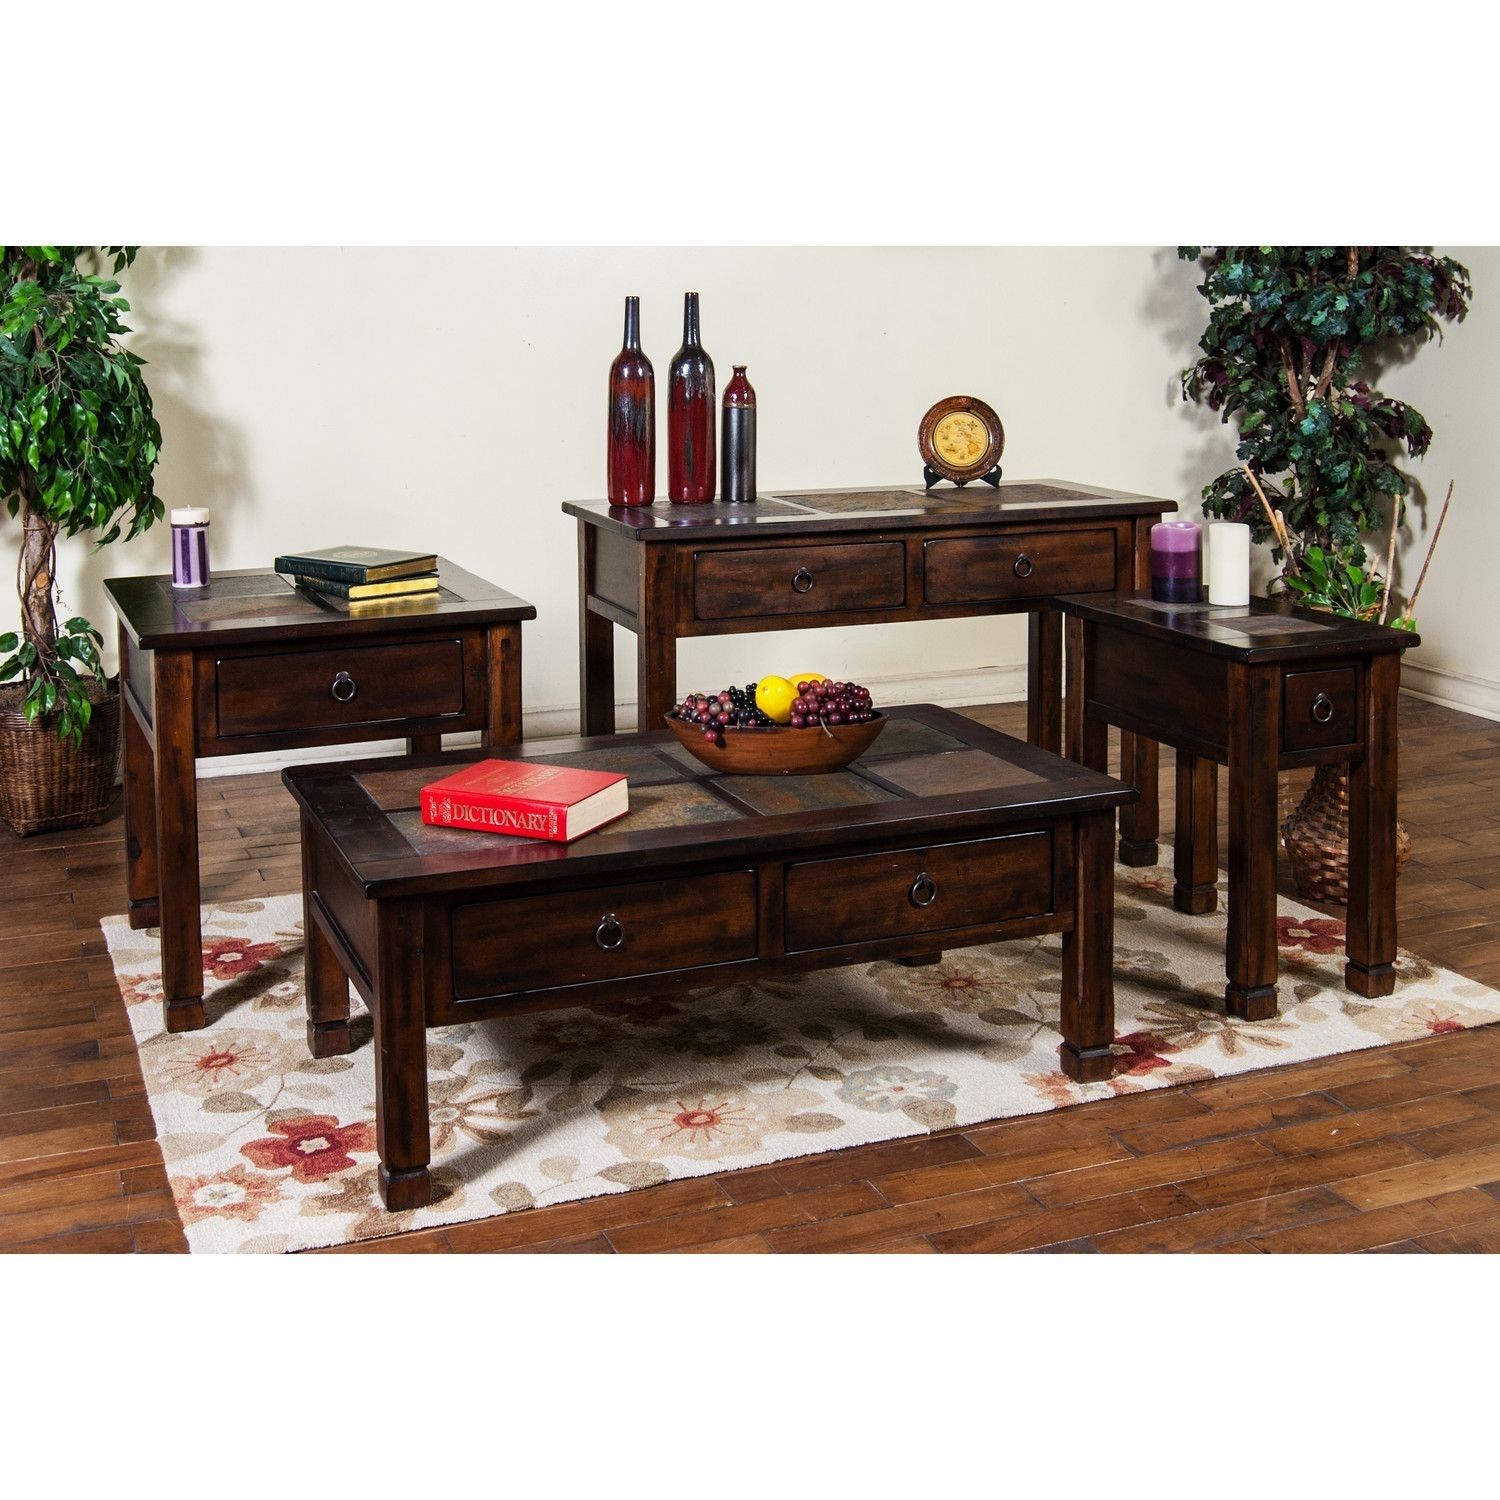 Sunny Designs Santa Fe Coffee Table | Living Room Tables | Pinterest Within Santa Fe Coffee Tables (View 4 of 30)